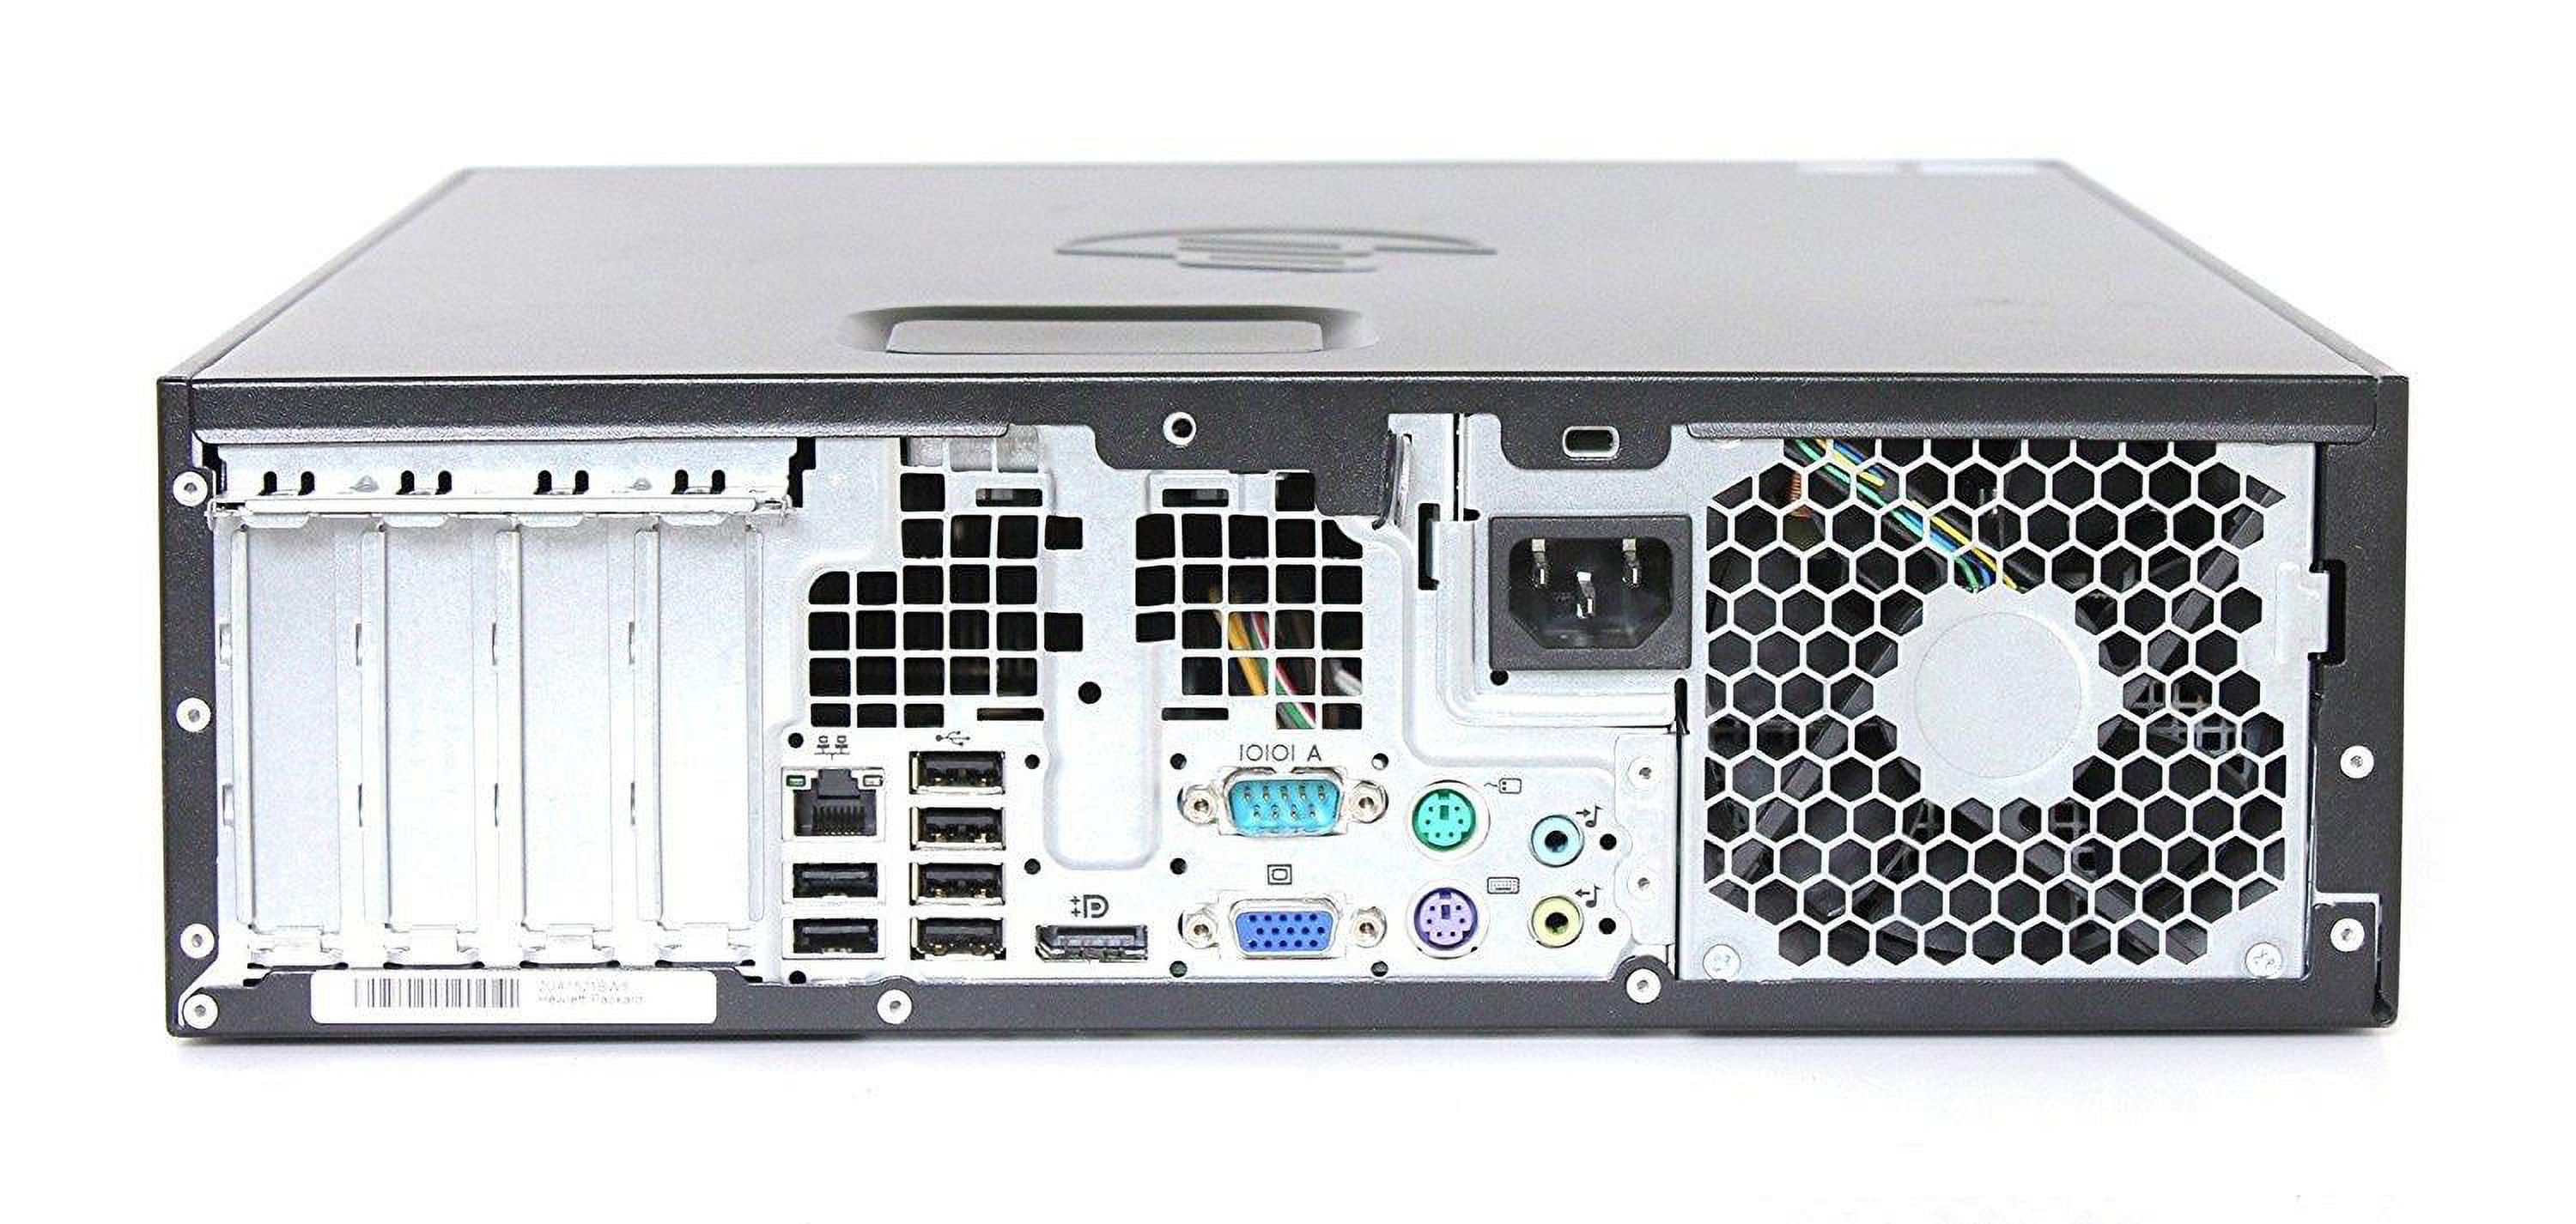 Used HP Compaq 8300 Elite Desktop Computer, Intel Core i7-3770 Processor, 16 GB of RAM, 256 GB SSD, DVD, Wi-Fi, Windows 10 Professional 64-Bit. - image 4 of 5